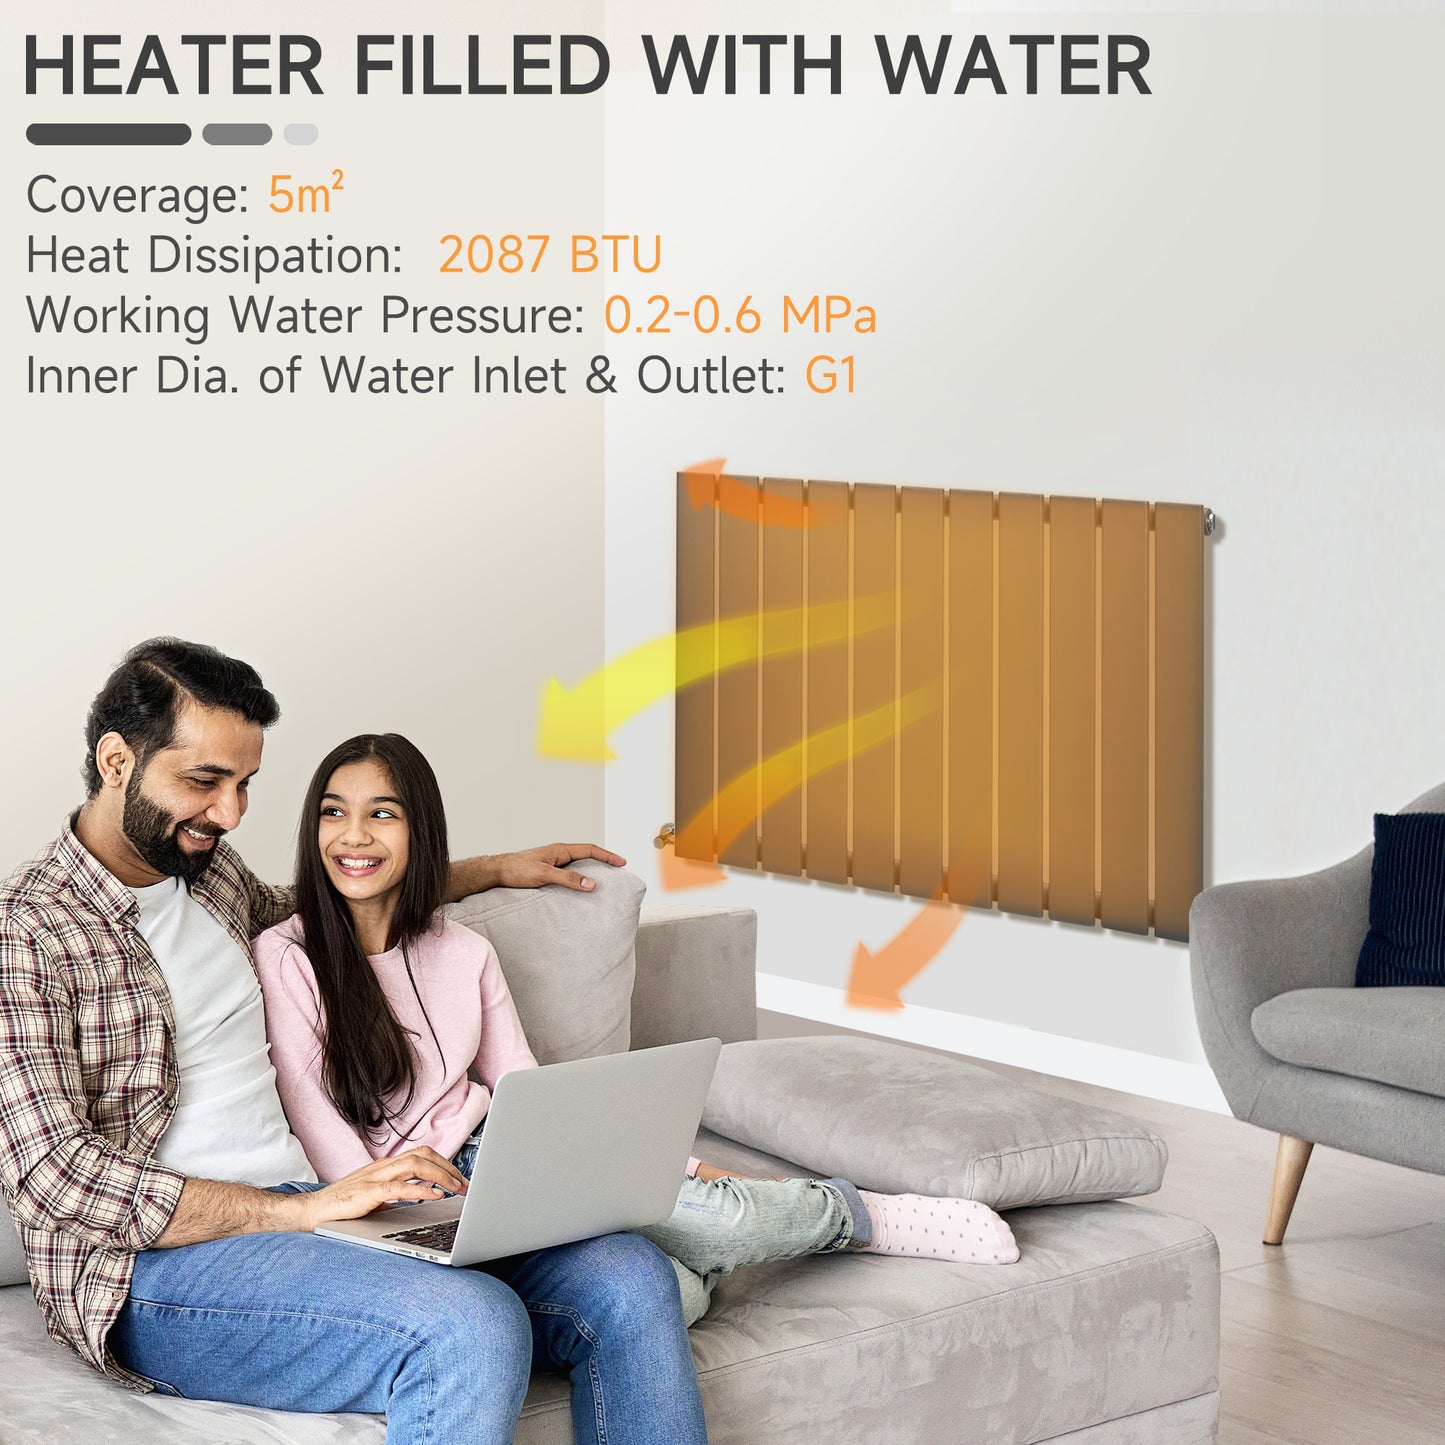 HOMCOM 83 x 60cm Space Heater, Water-filled Heater for Home, Single-layer Horizontal Designer Radiators, Quick Warm up Living room, Study Garage Grey